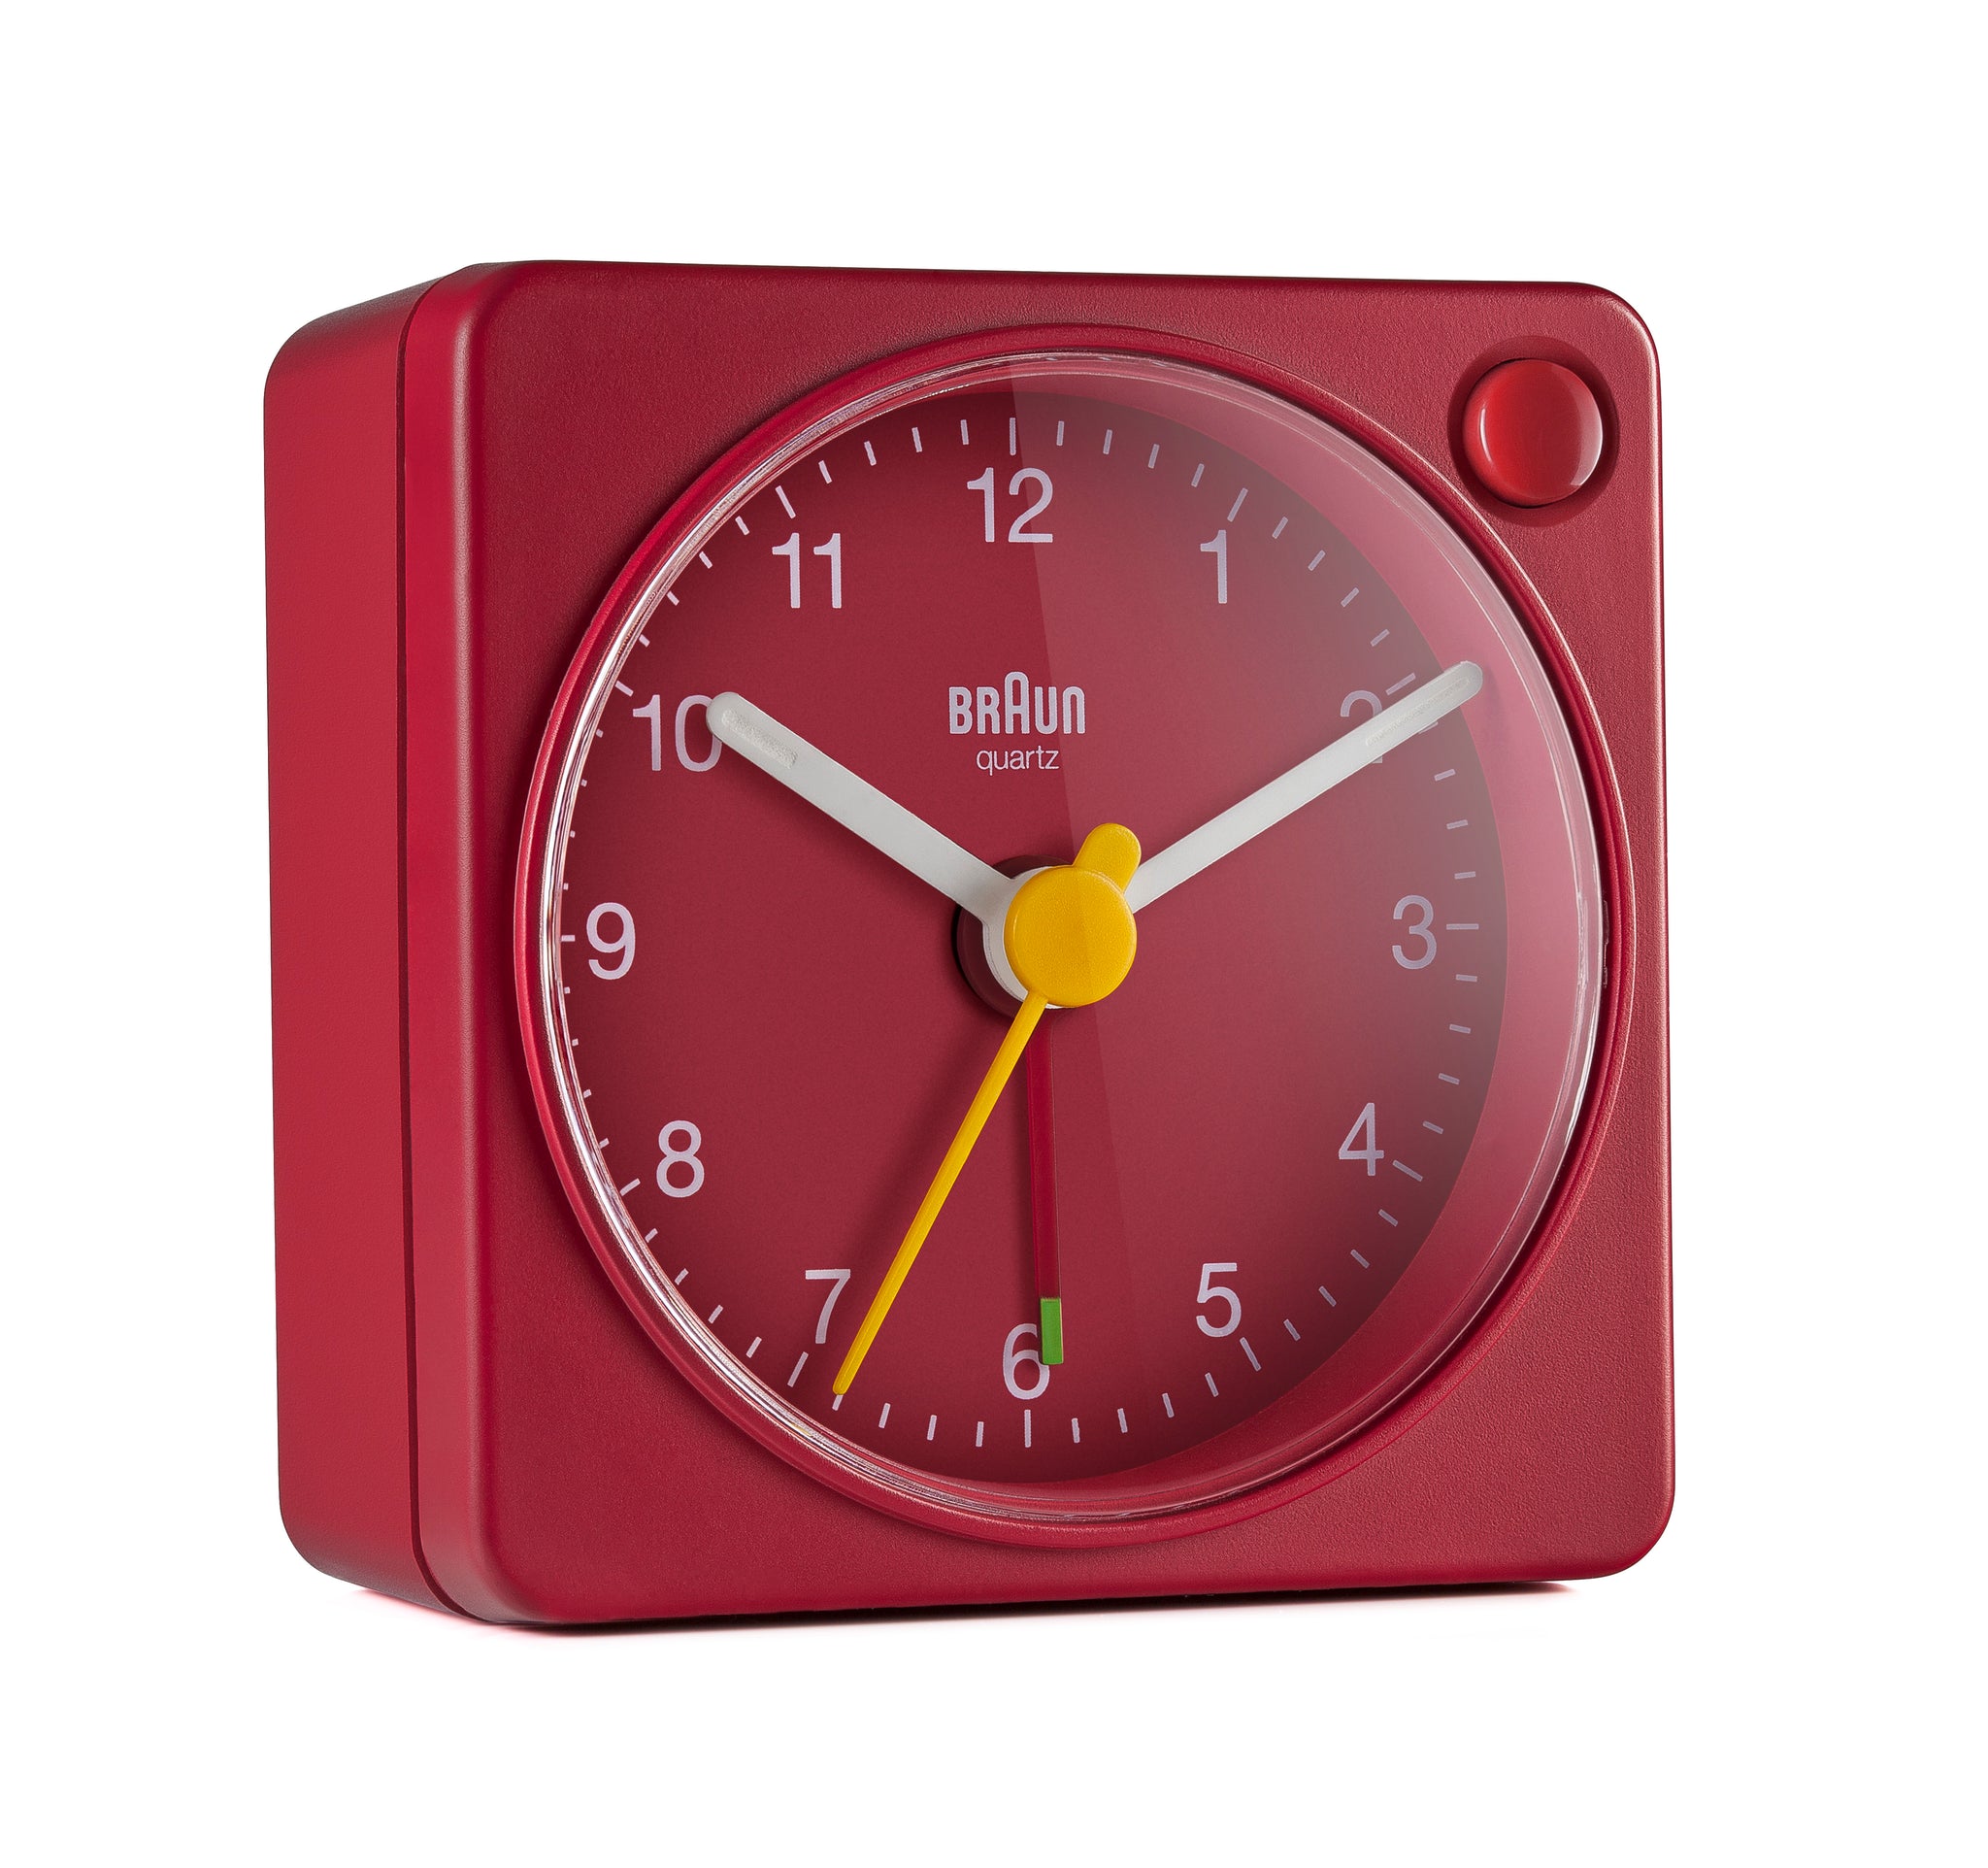 BC02R Classic Travel Analogue Alarm Clock